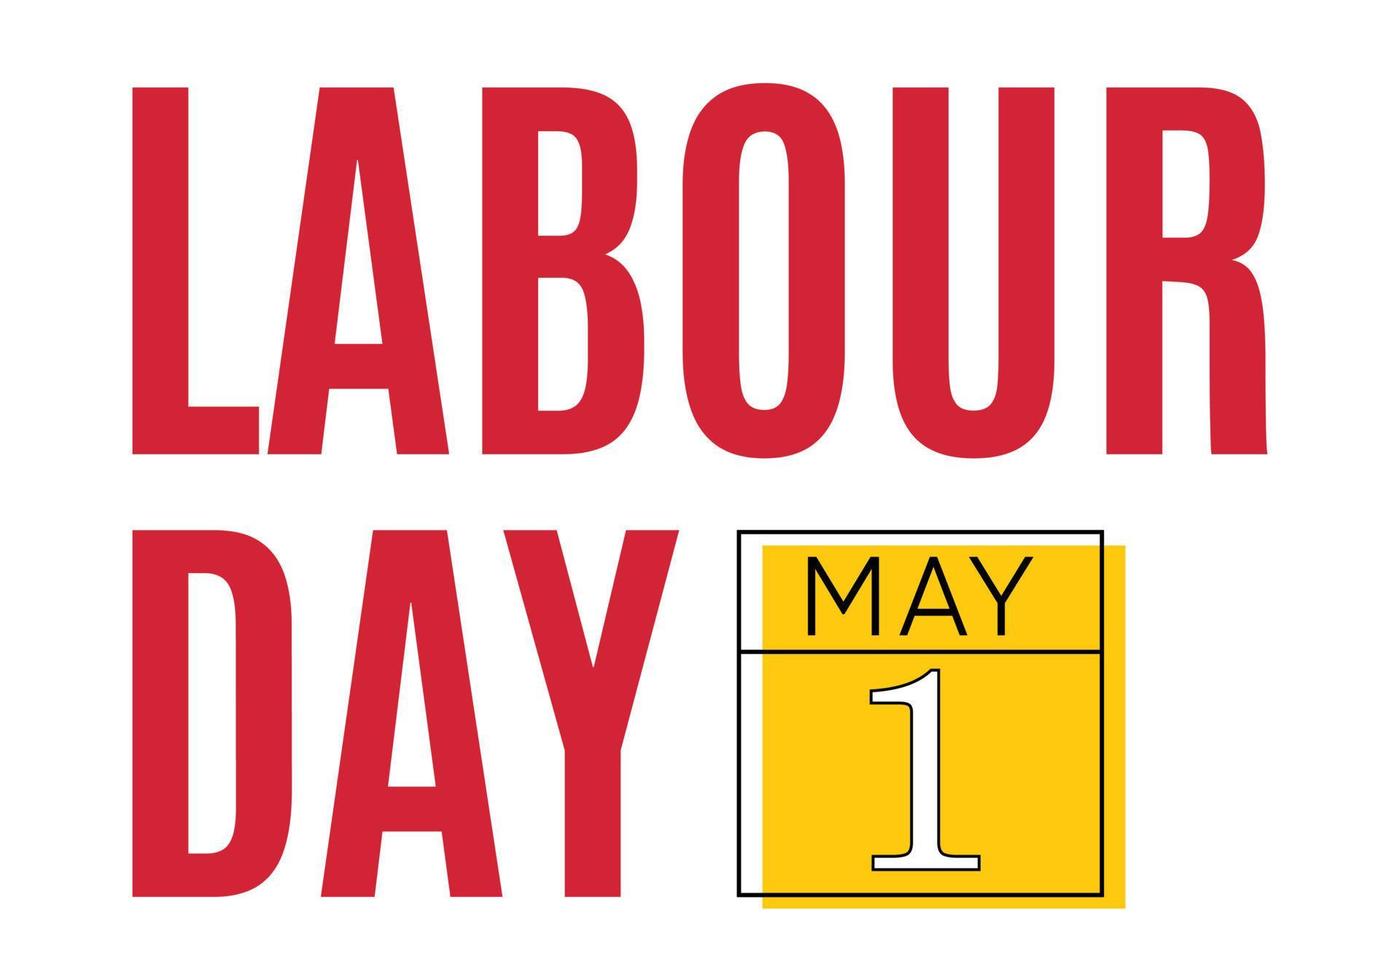 Internationale arbeid dag poster rood en geel kleuren. 1e mei arbeider s dag. vector